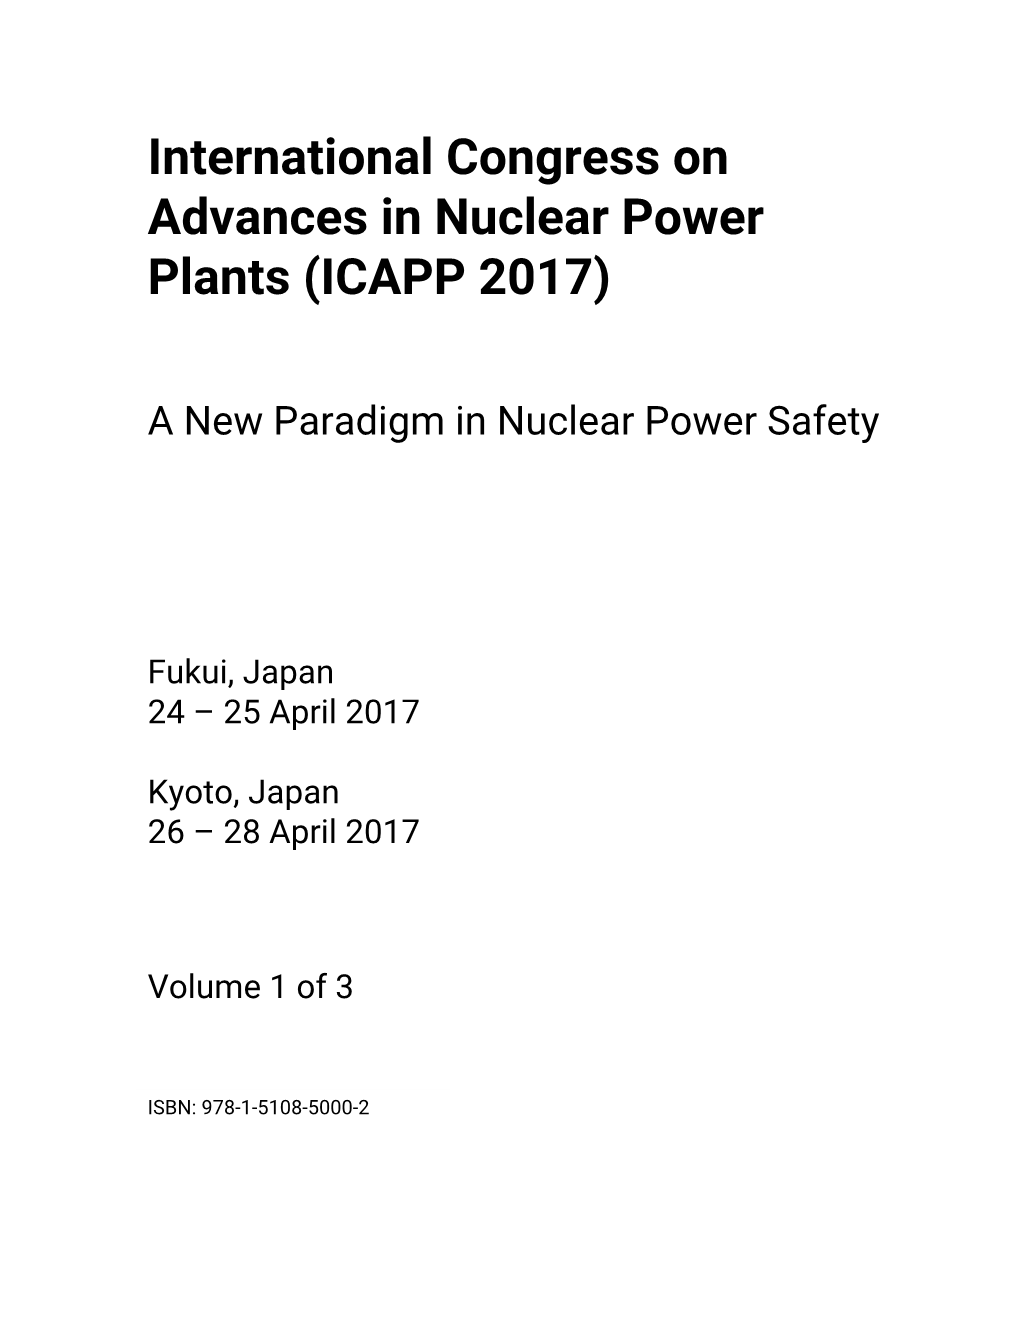 International Congress on Advances in Nuclear Power Plants